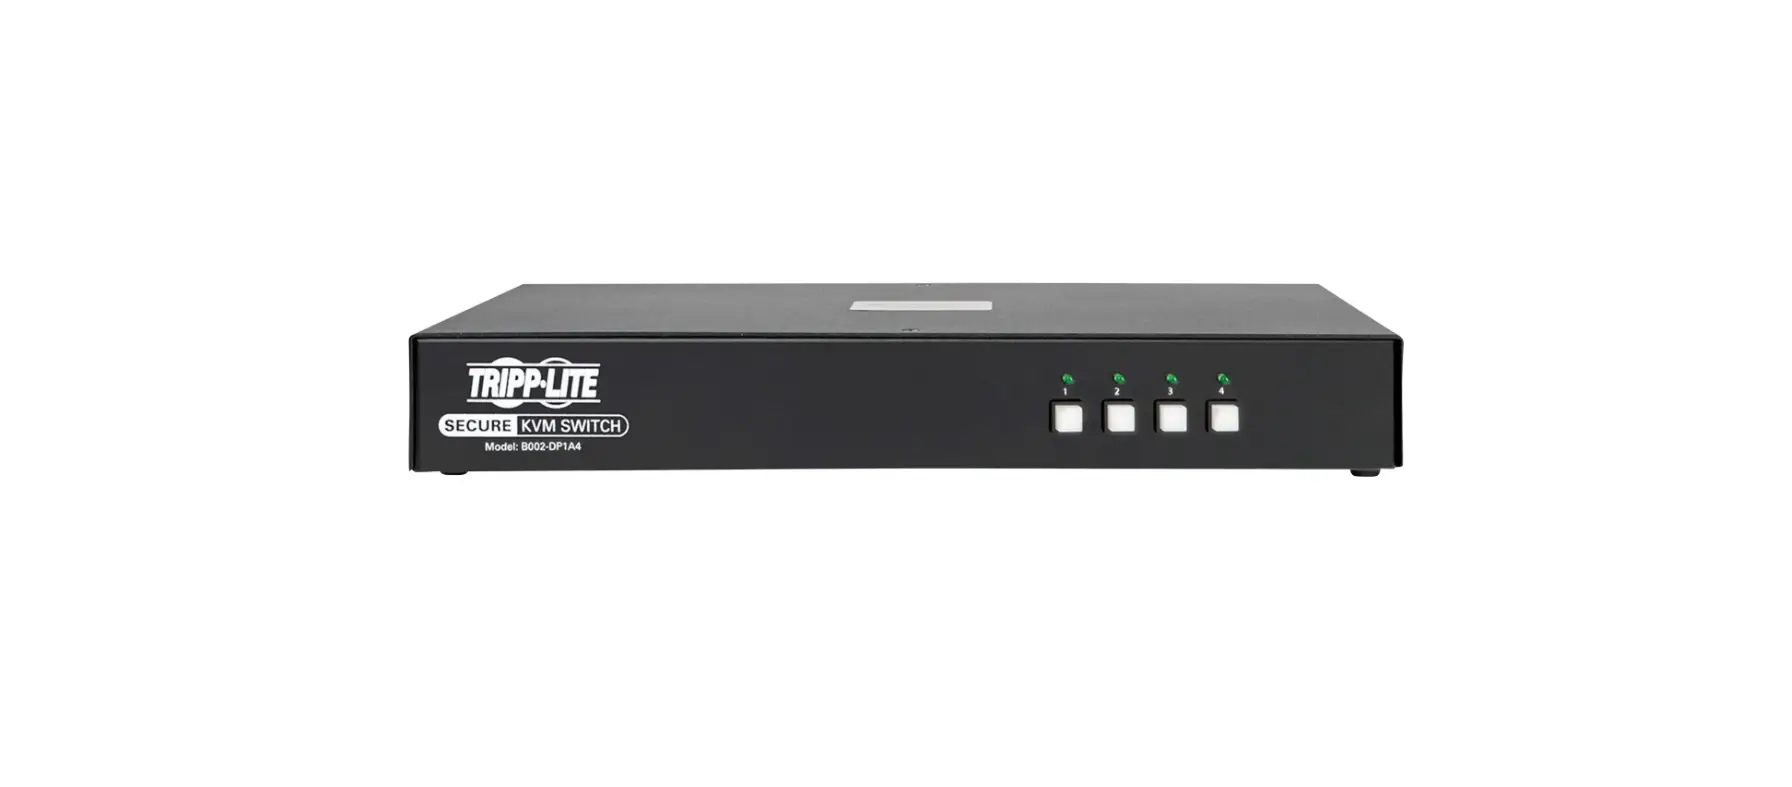 TRIPP-LITE B002-DP1A4 Secure KVM Switches